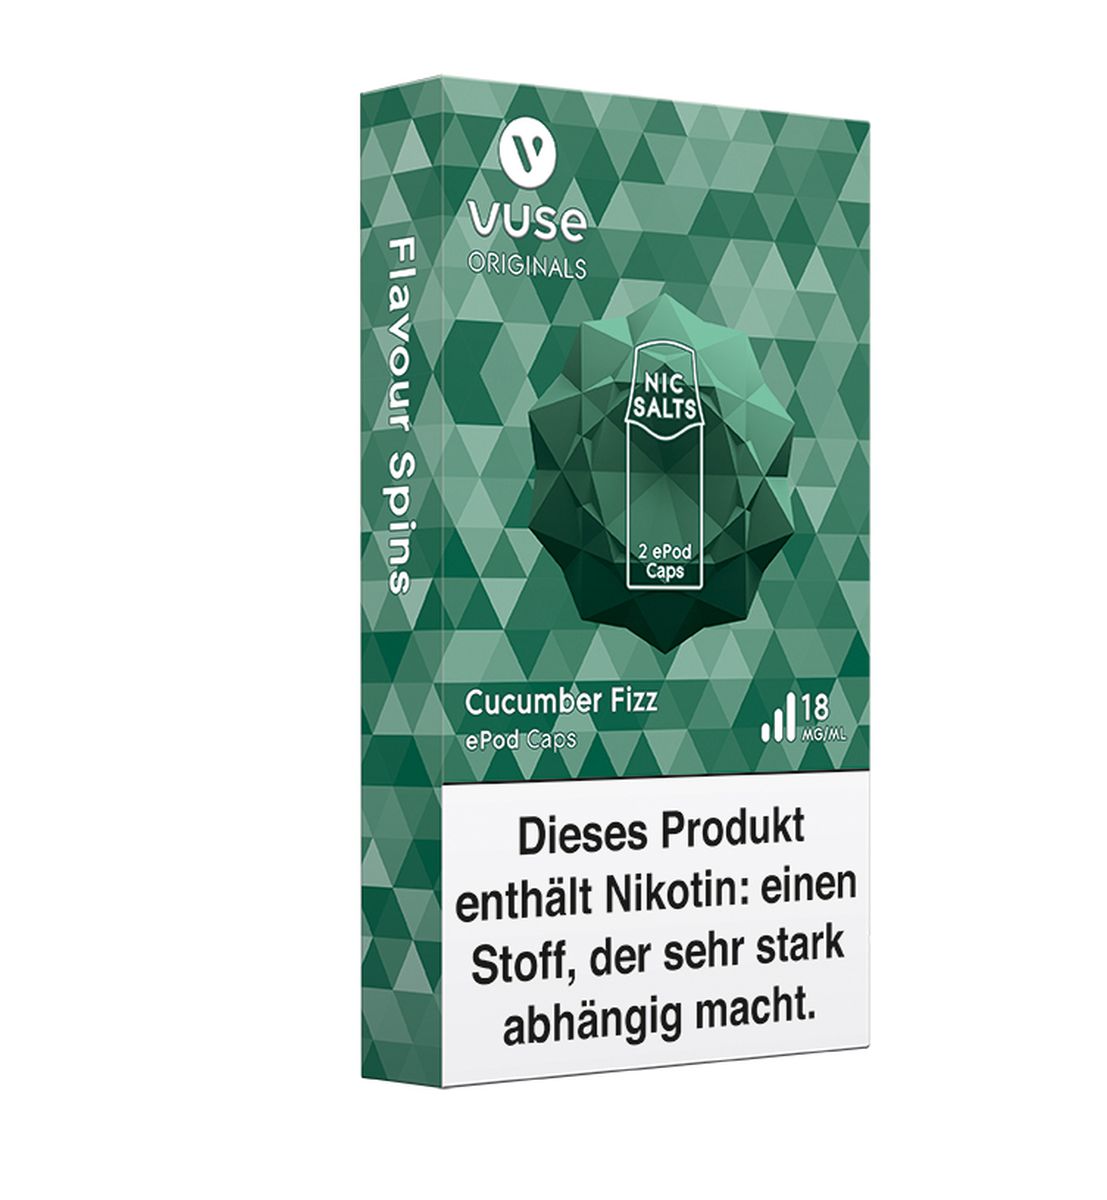 Vuse Vuse ePod Caps Cucumber Fizz Nic Salts 18mg Nikotin 1,9ml bei www.Tabakring.de kaufen